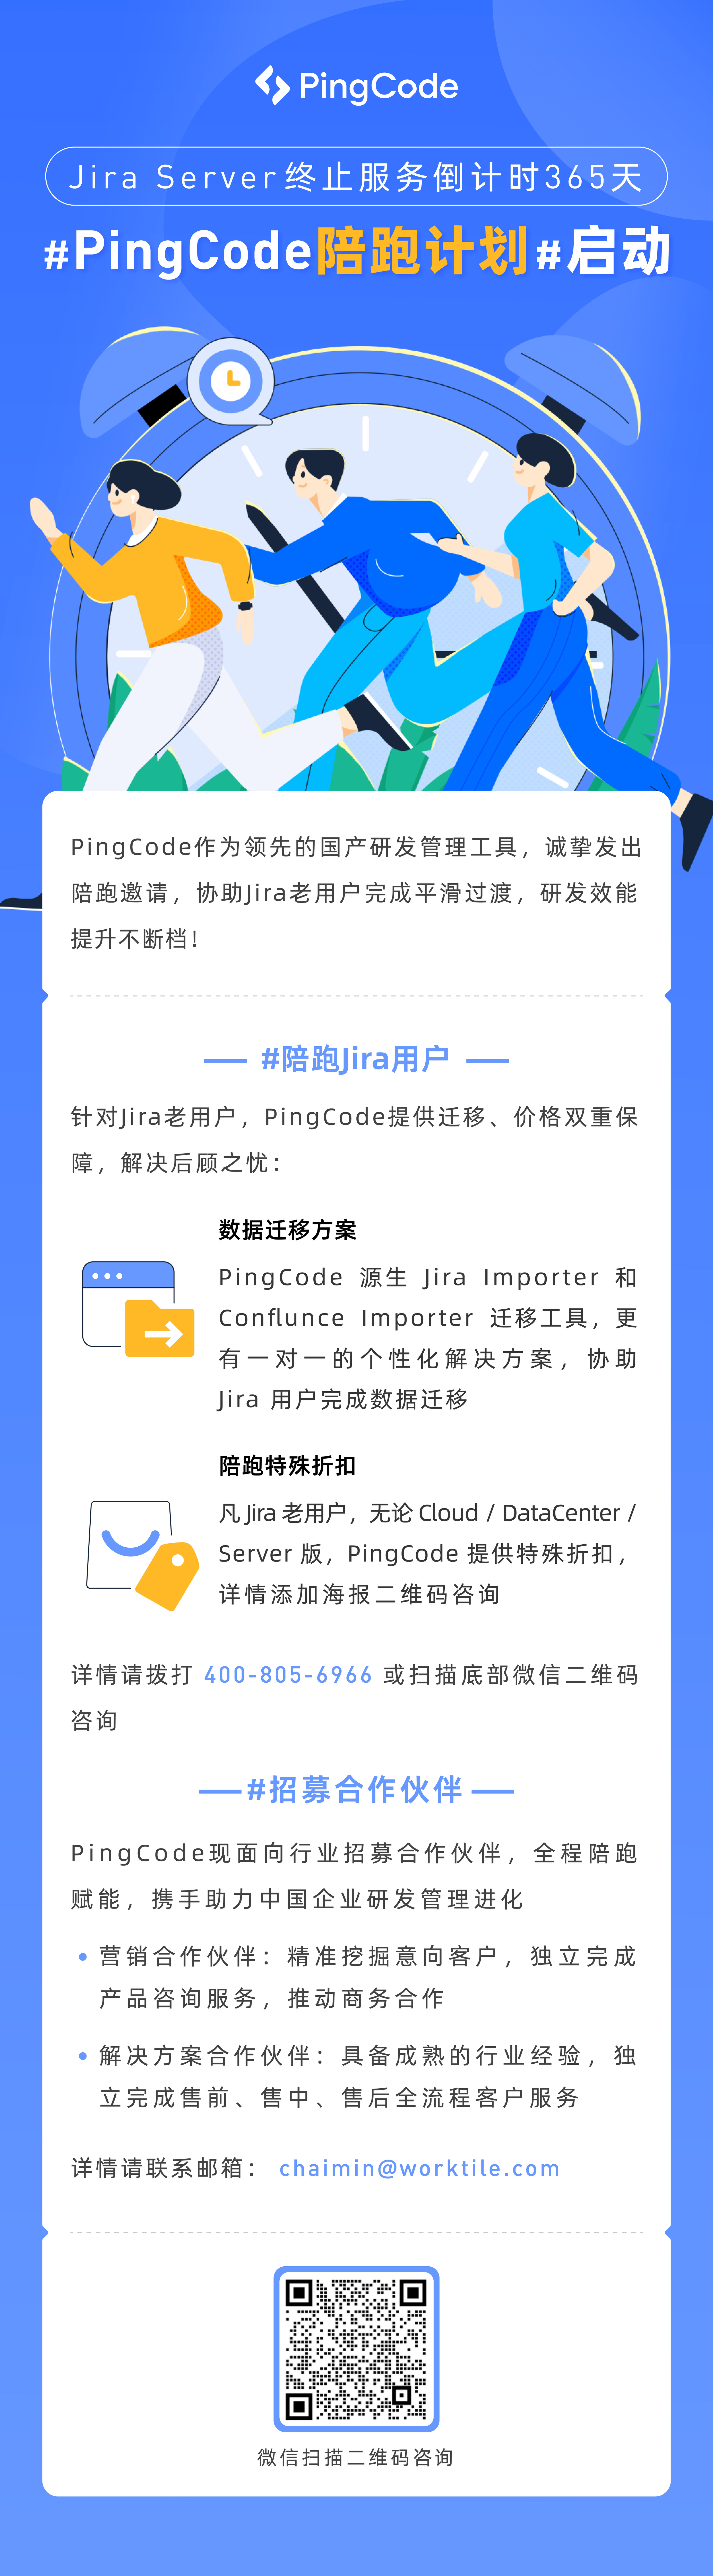 Jira 、Confluence Server版终止支持进入倒计时，企业要如何最小化影响？PingCode陪跑计划发布